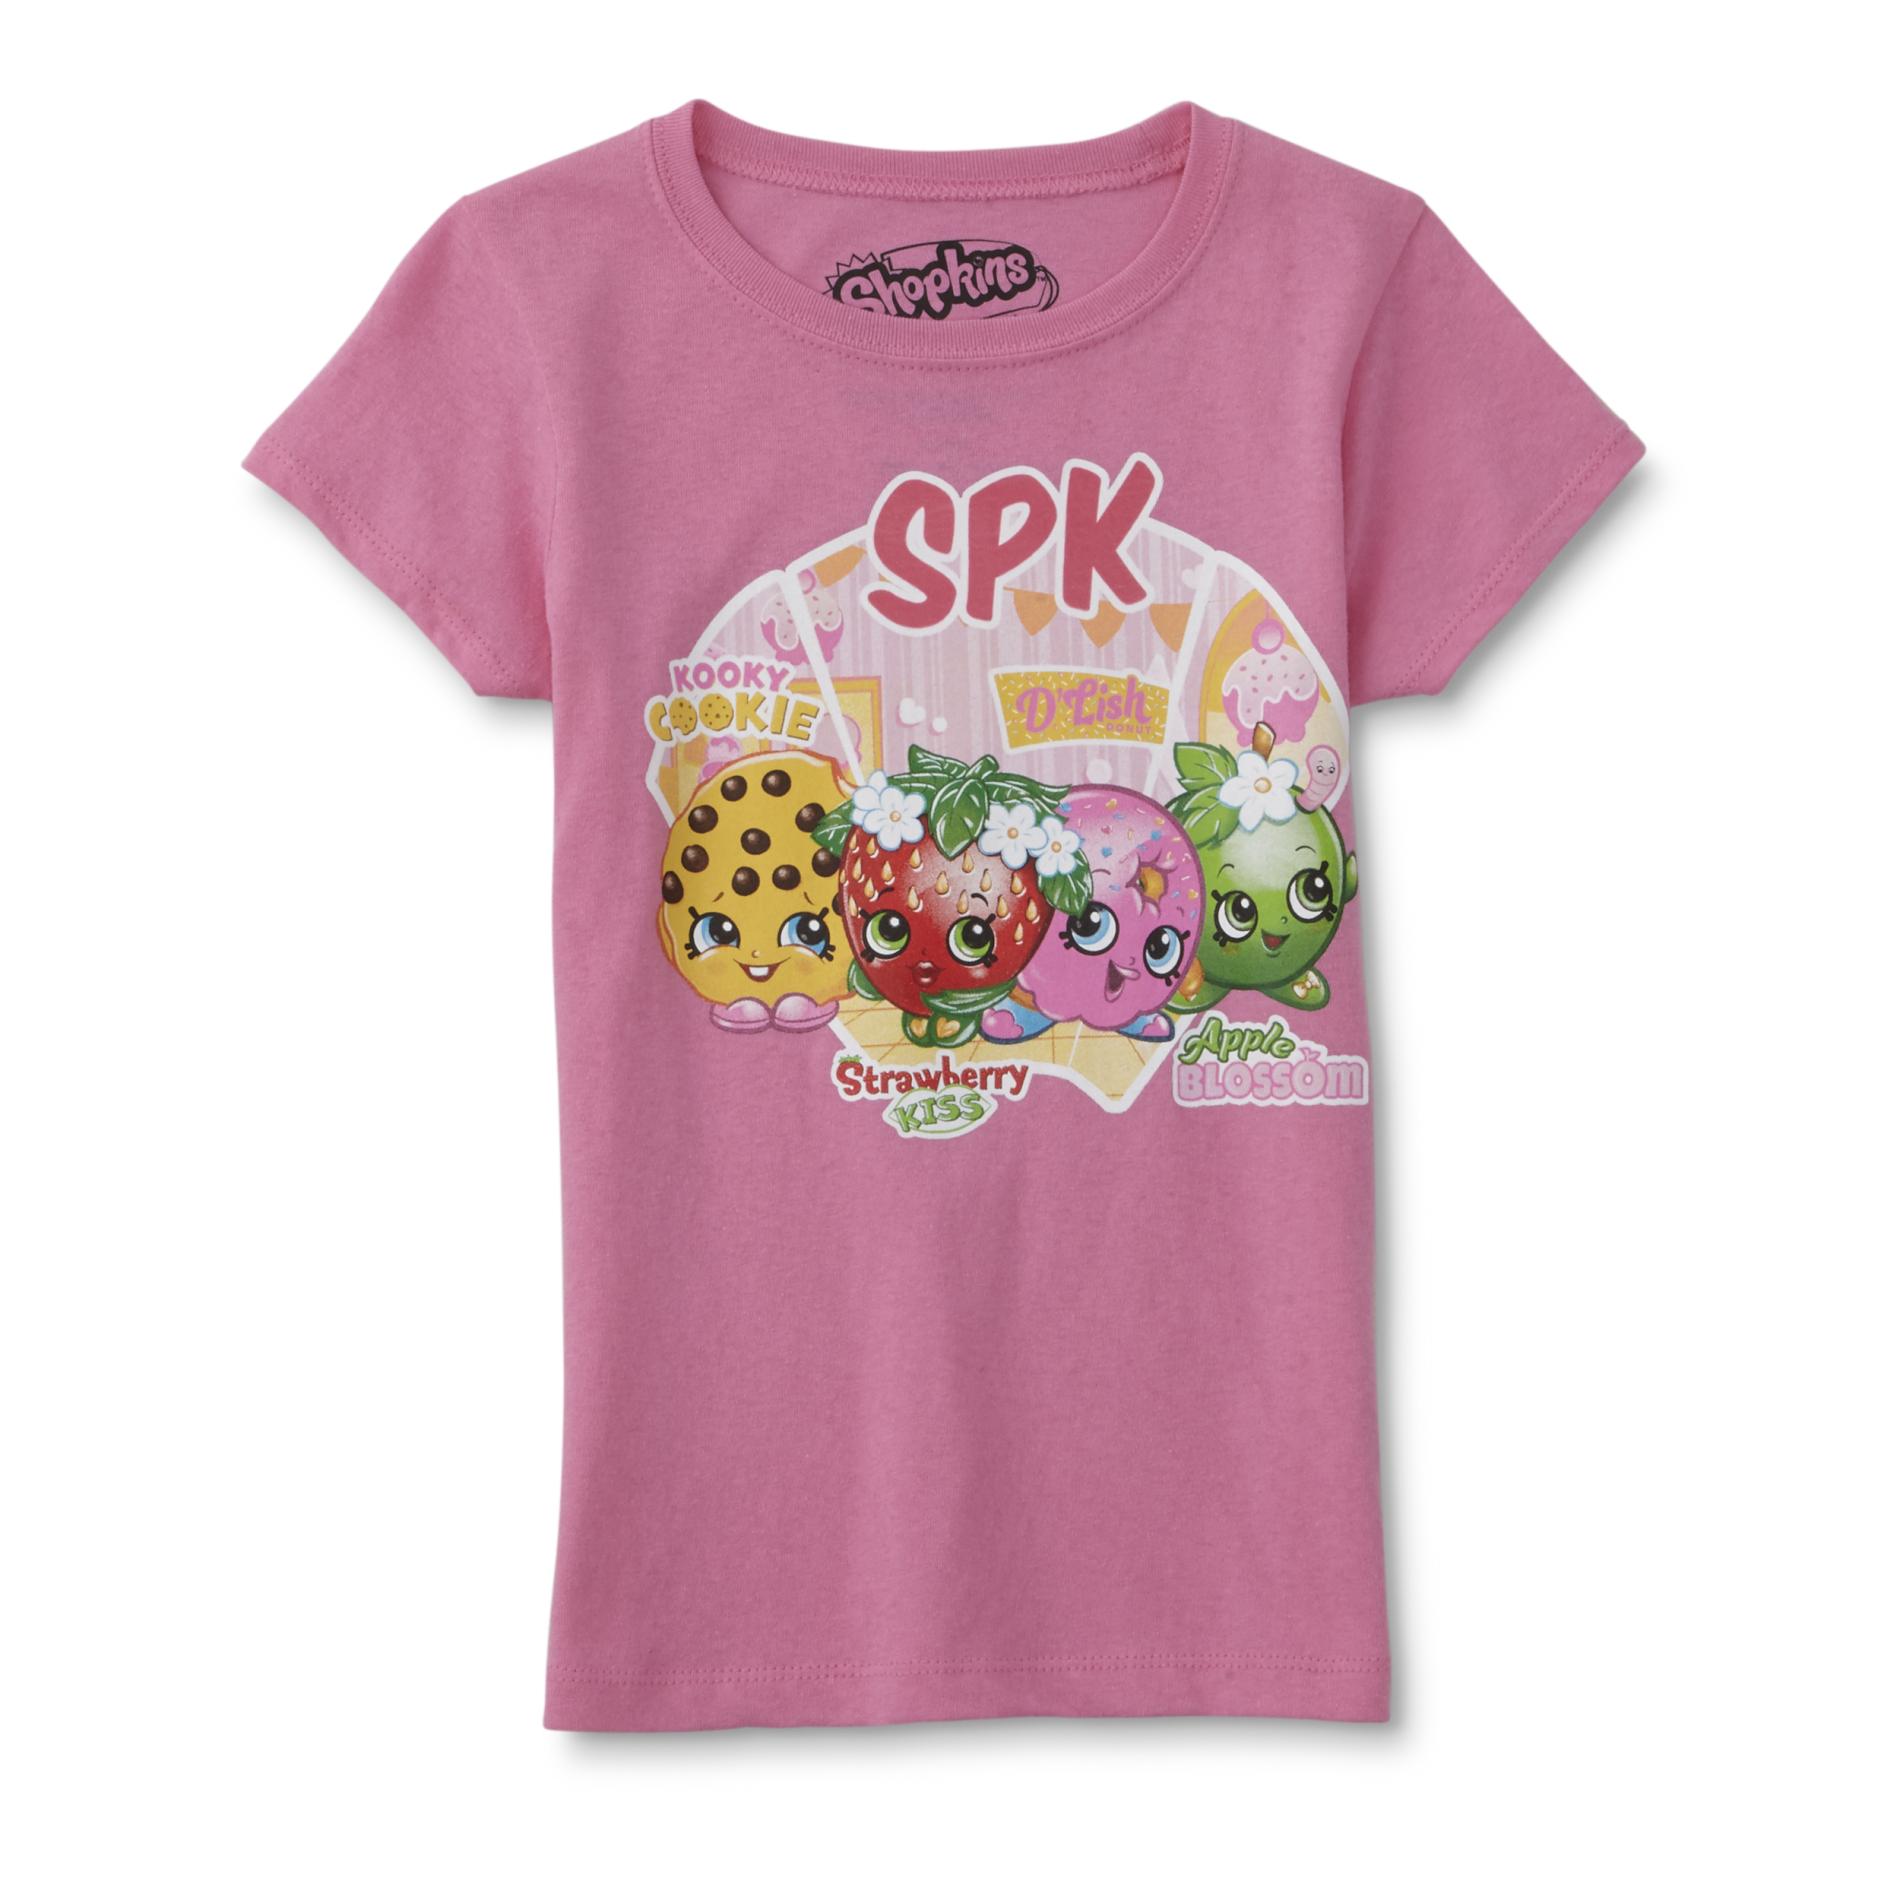 Shopkins Girls' Graphic T-Shirt